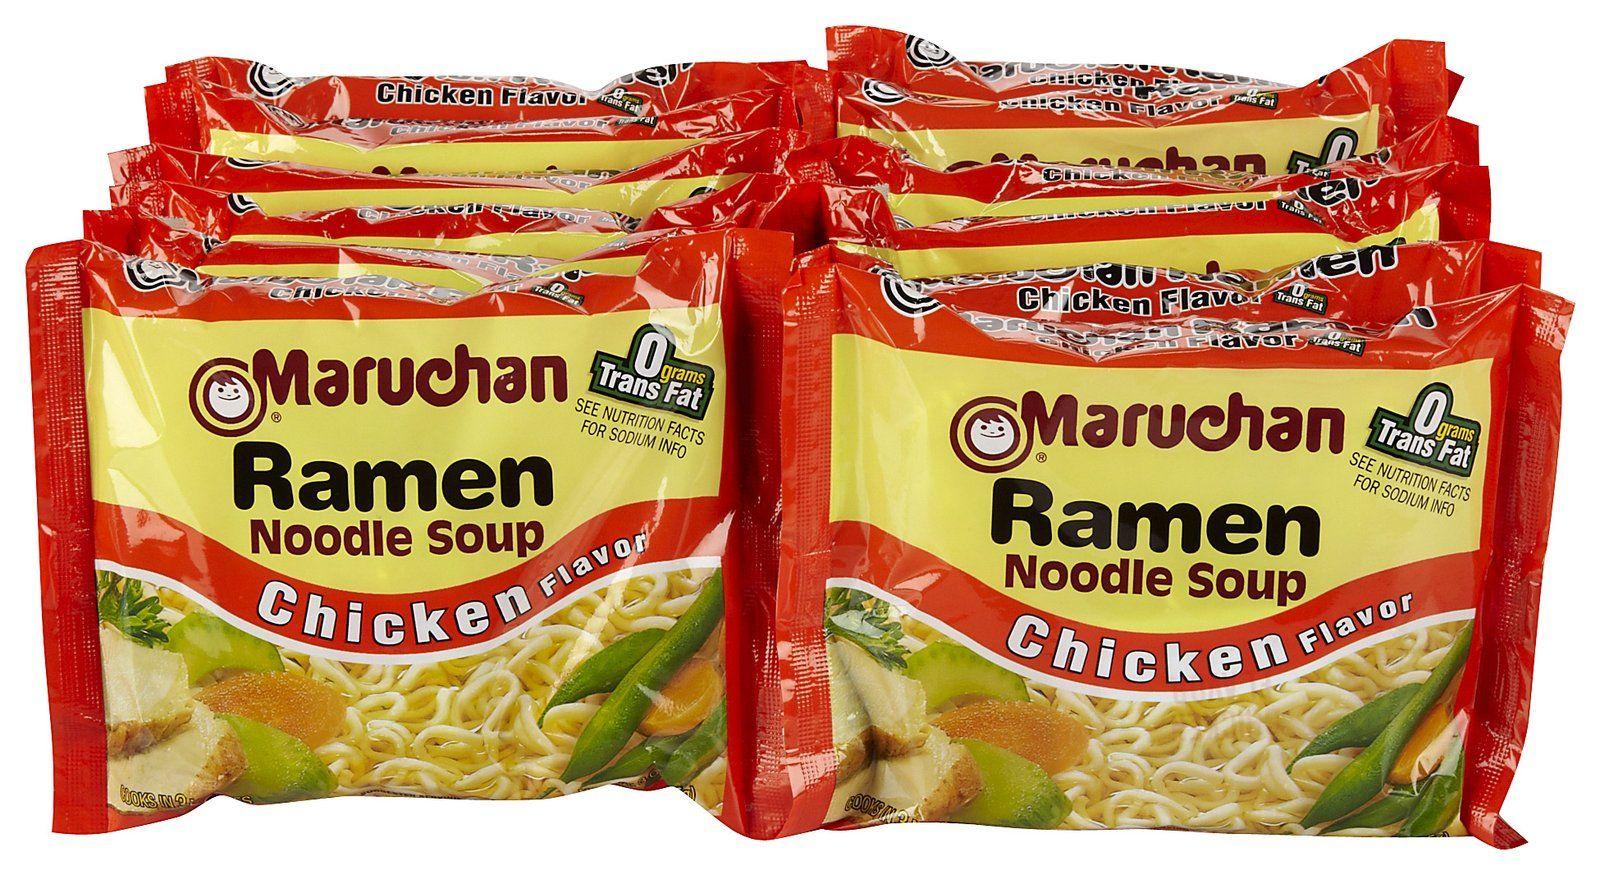 Maruchan Ramen Noodles Logo - The Ramen Noodle Diet: Not Just for College Students